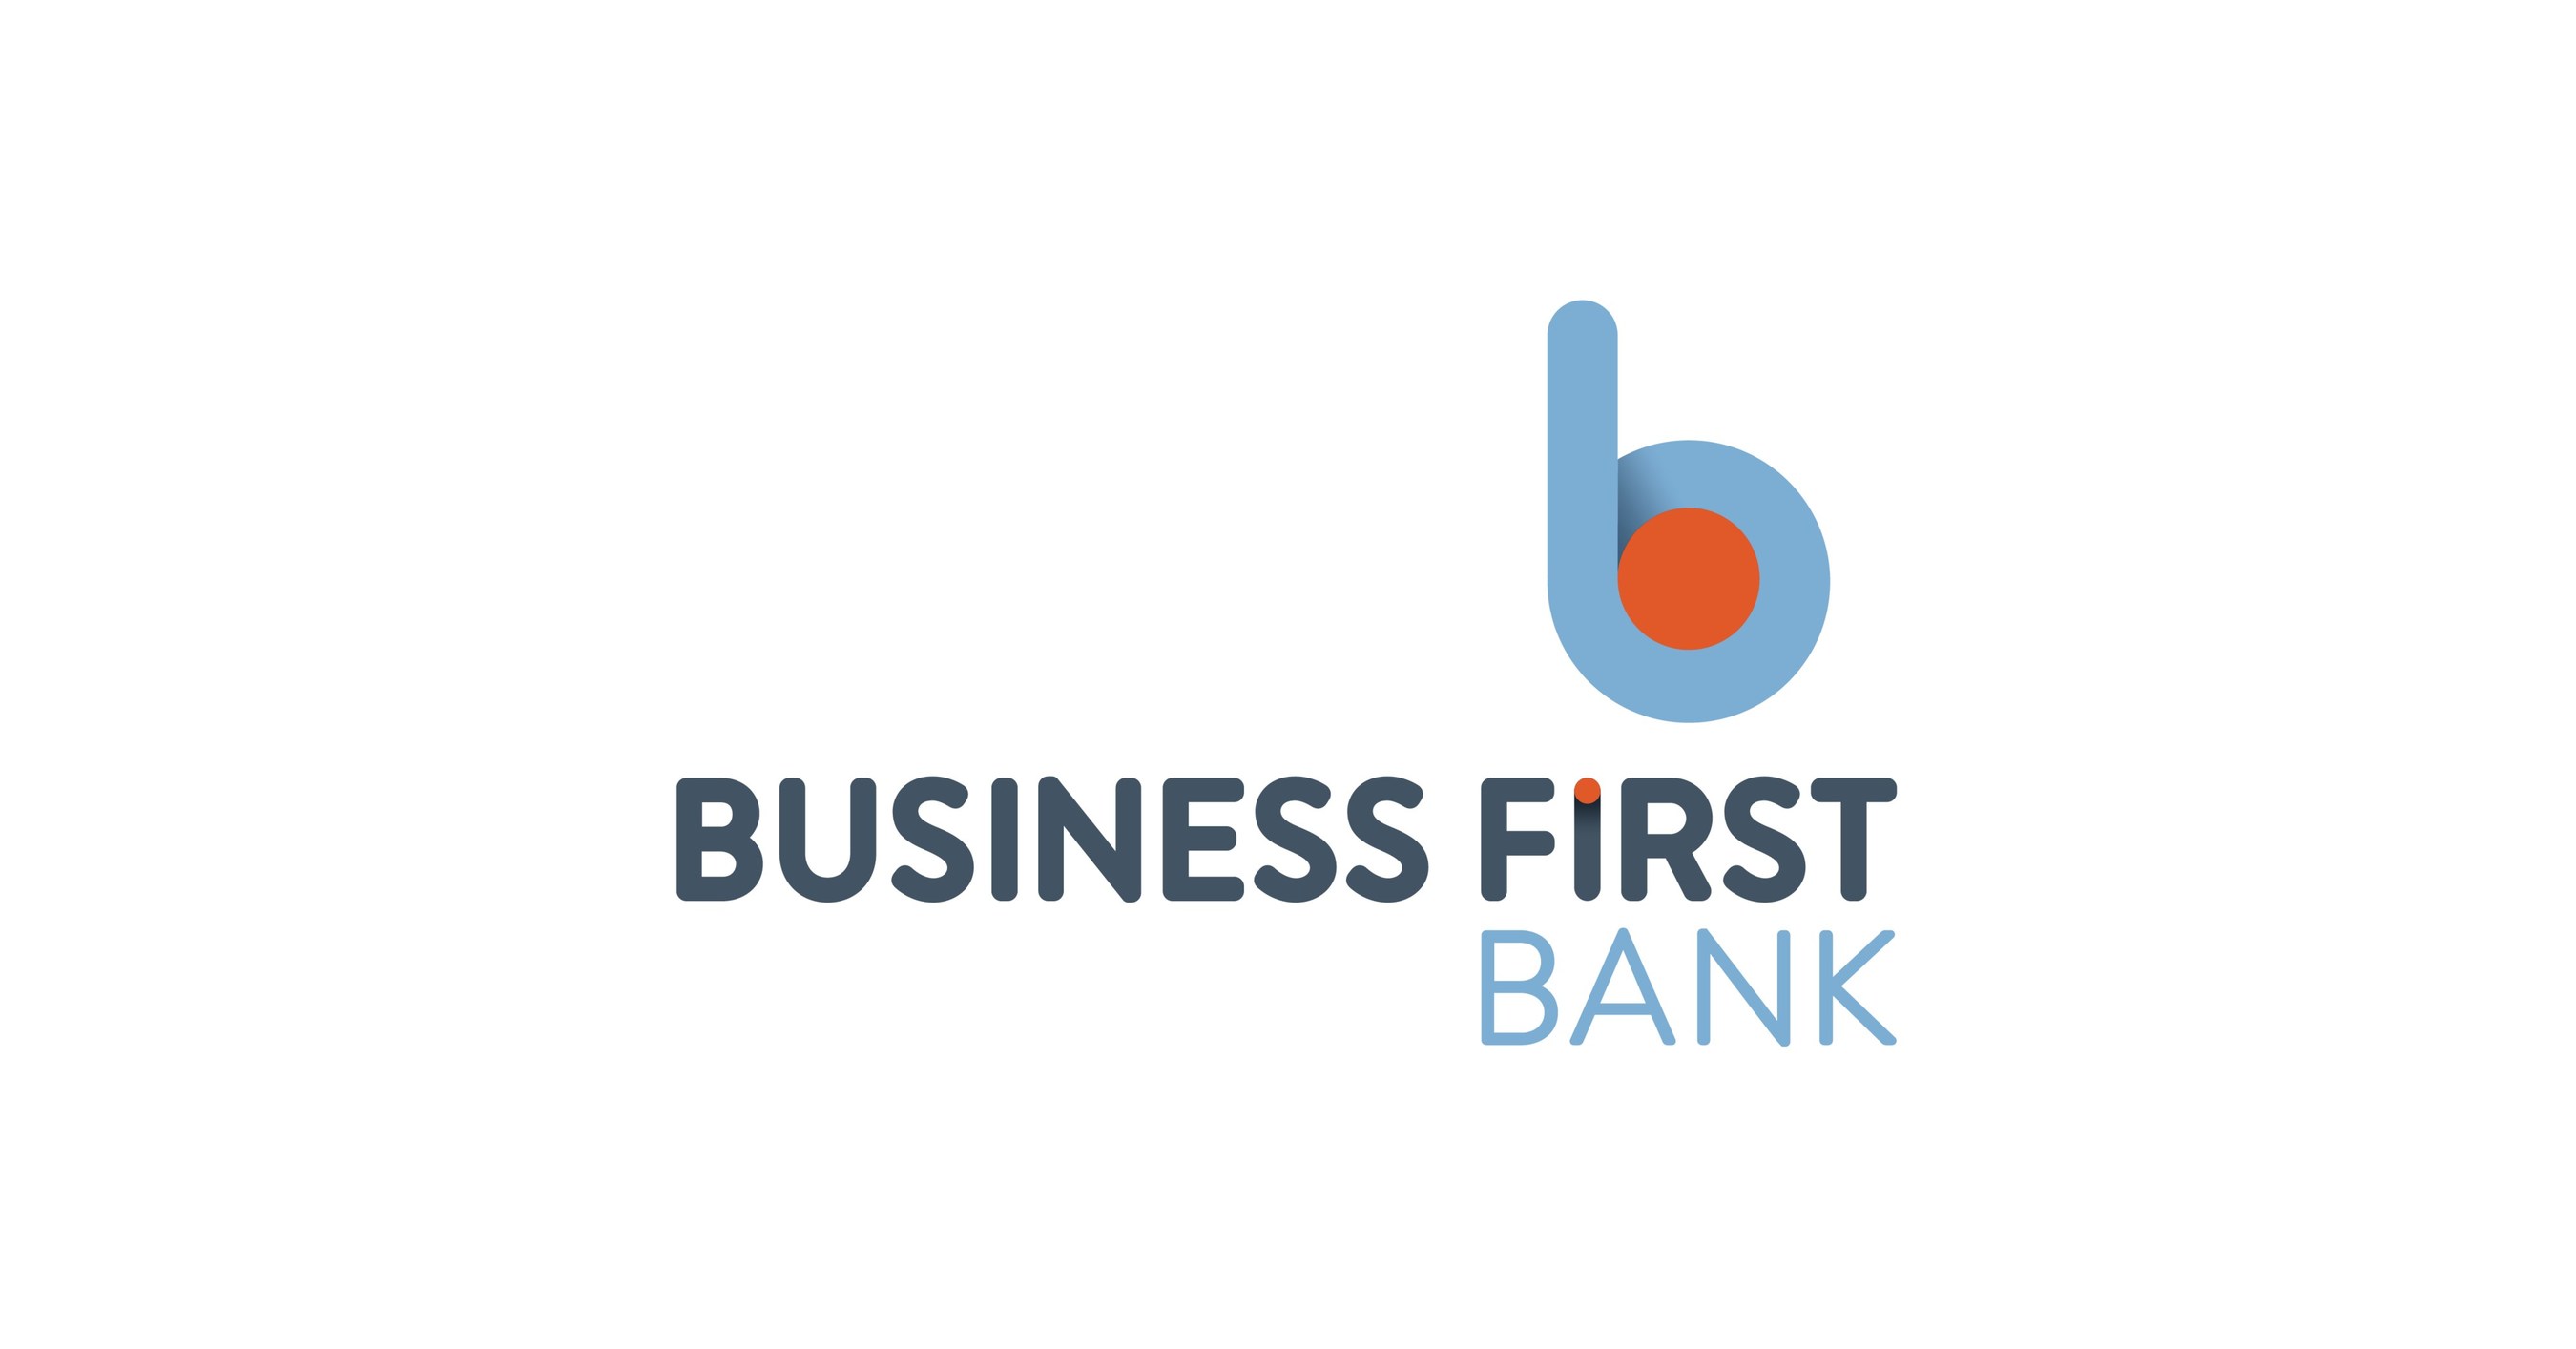 Business First Bancshares